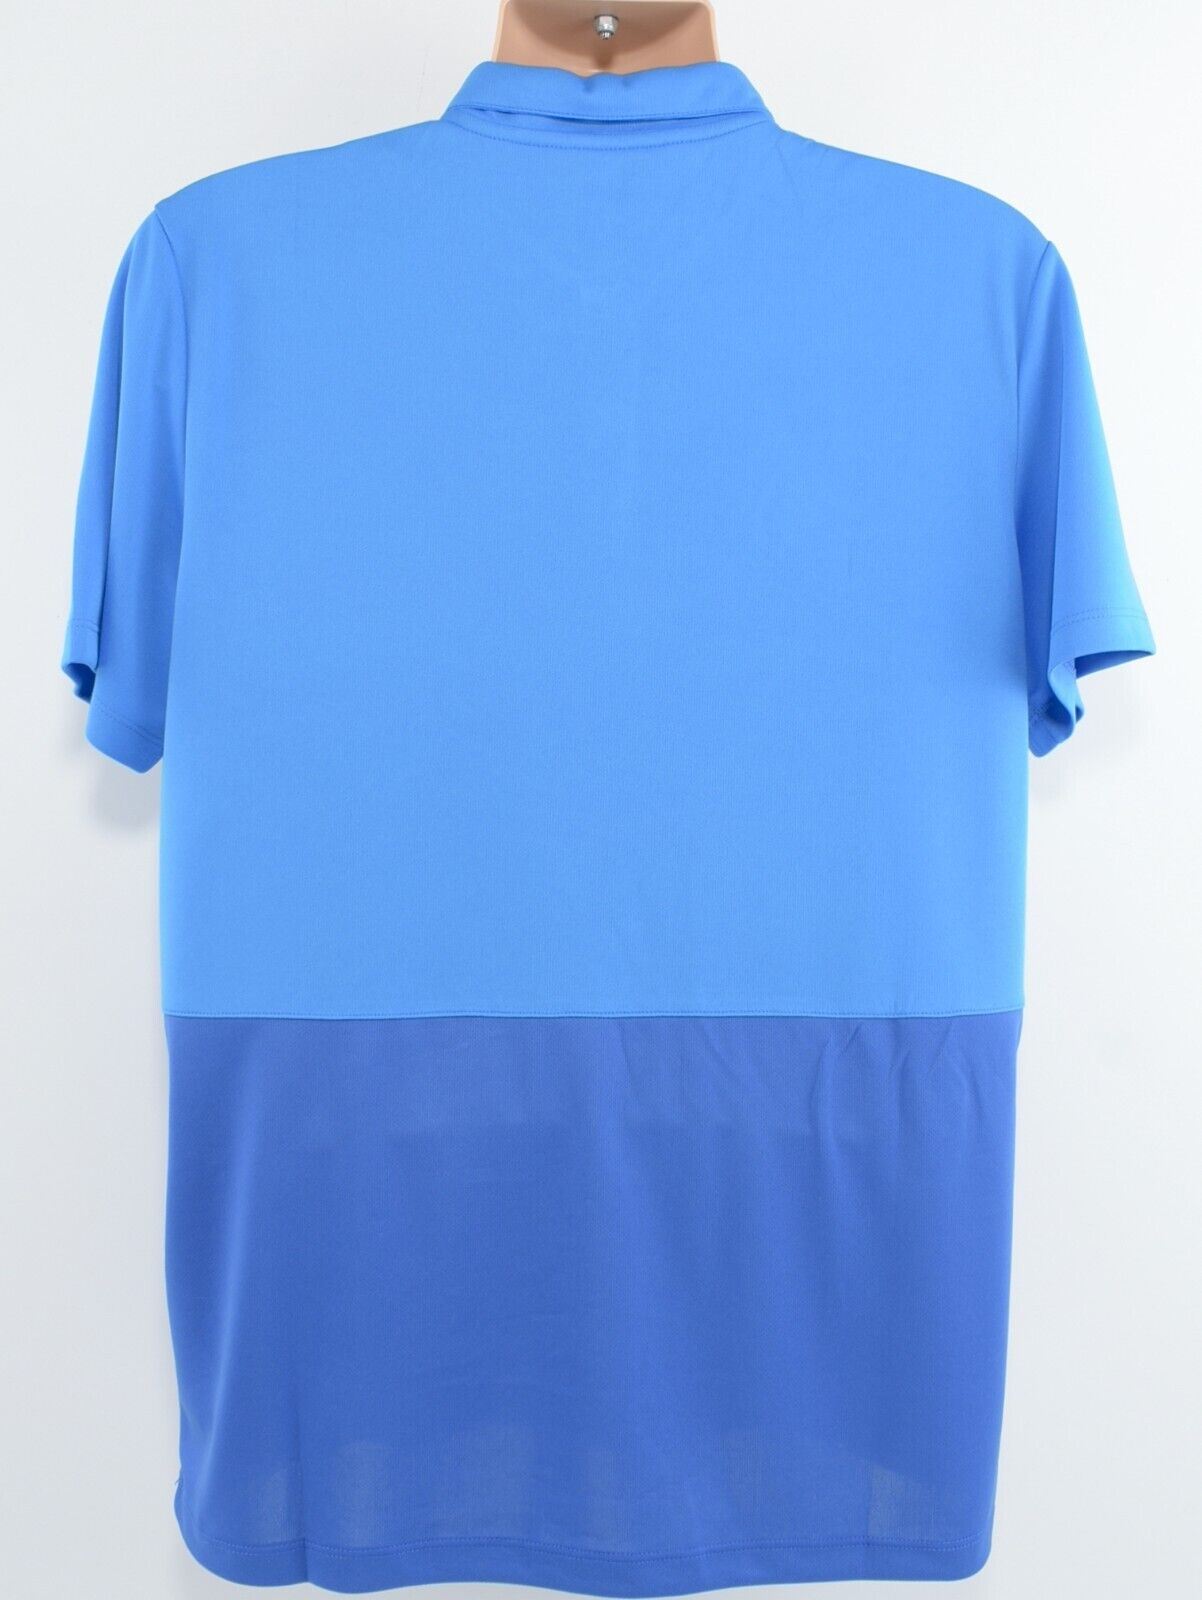 UMBRO Mens Performance Polo Shirt, Colour-block French Blue/Blue, size LARGE